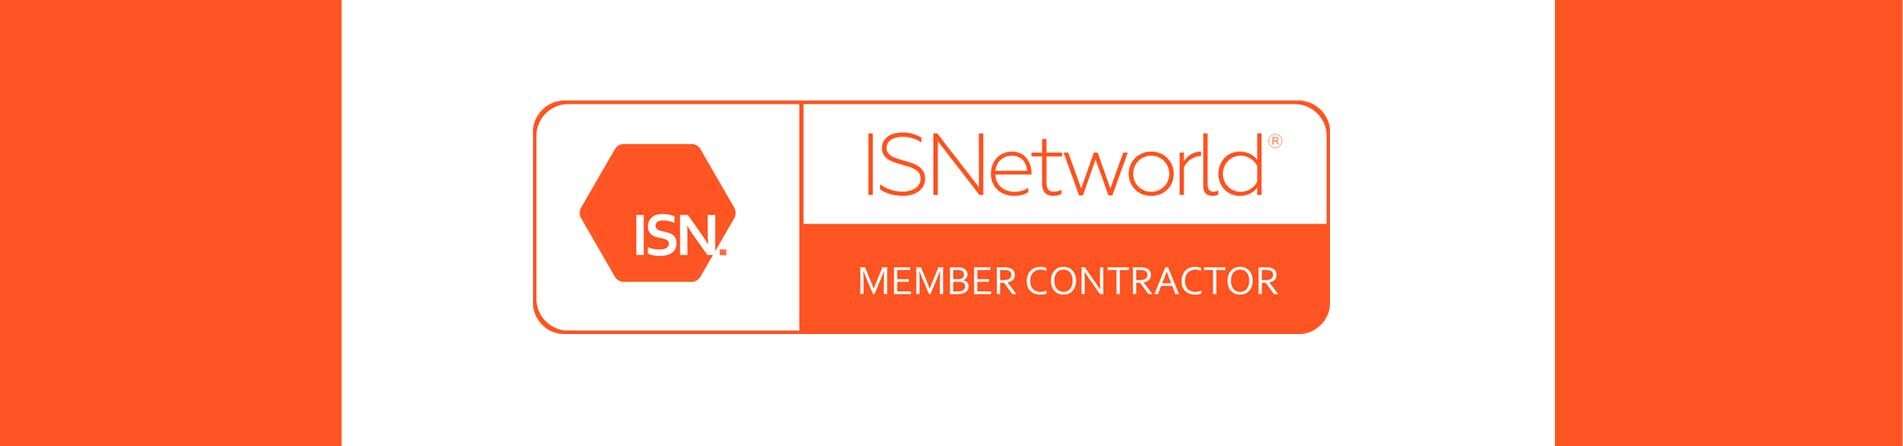 ISNetworld-Logo